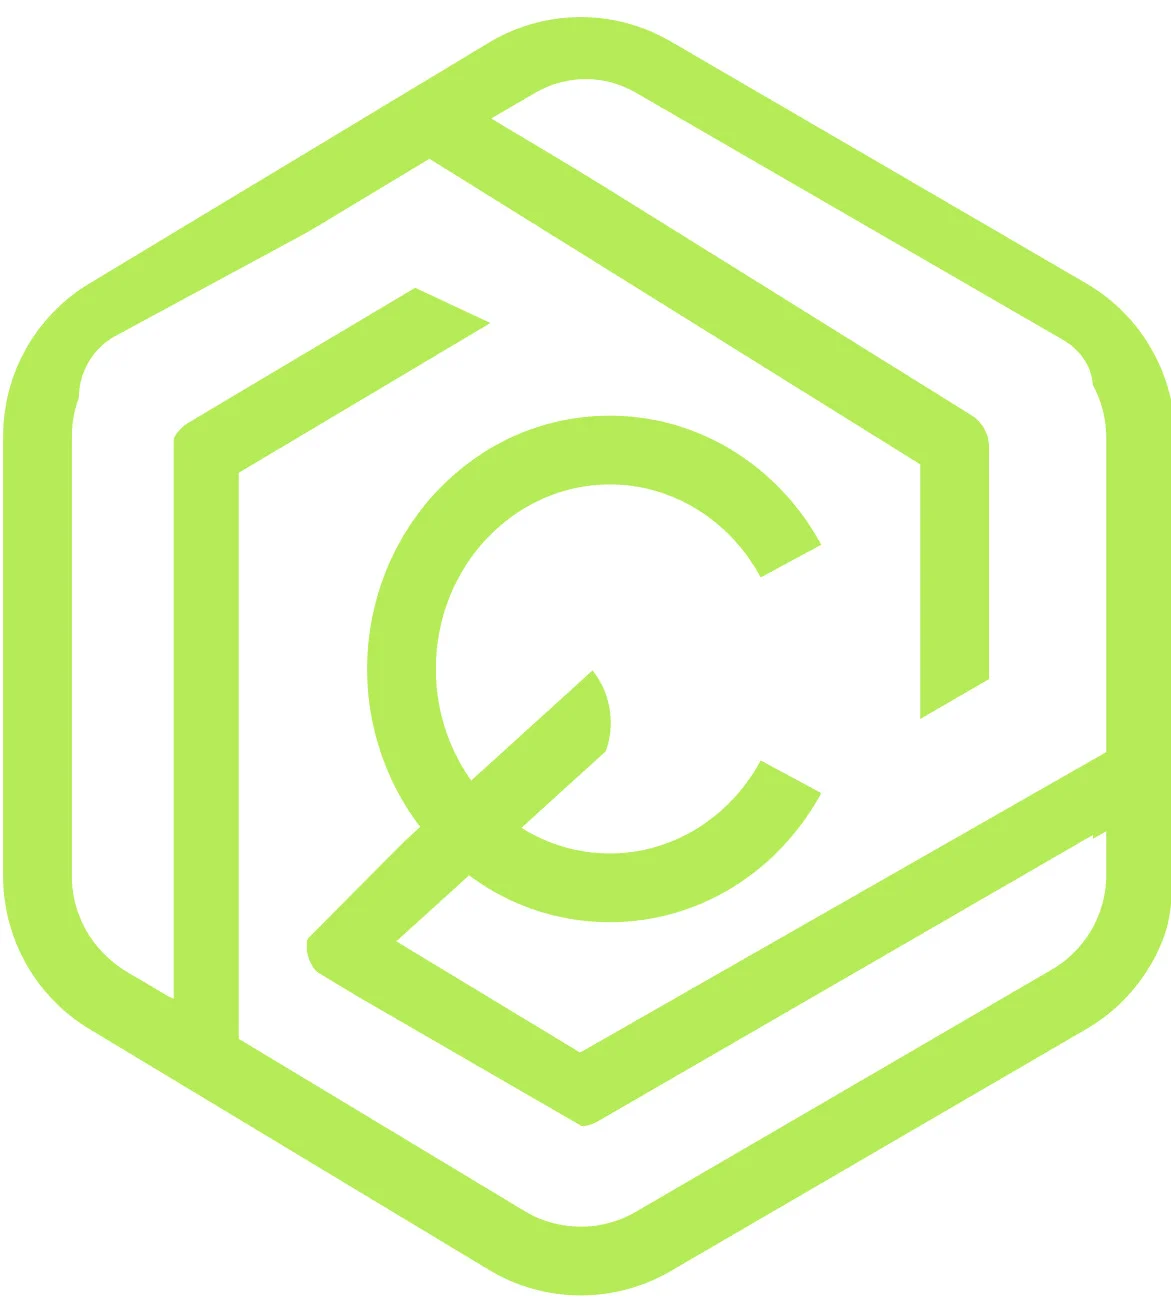 CratD2C Smart Chain logo